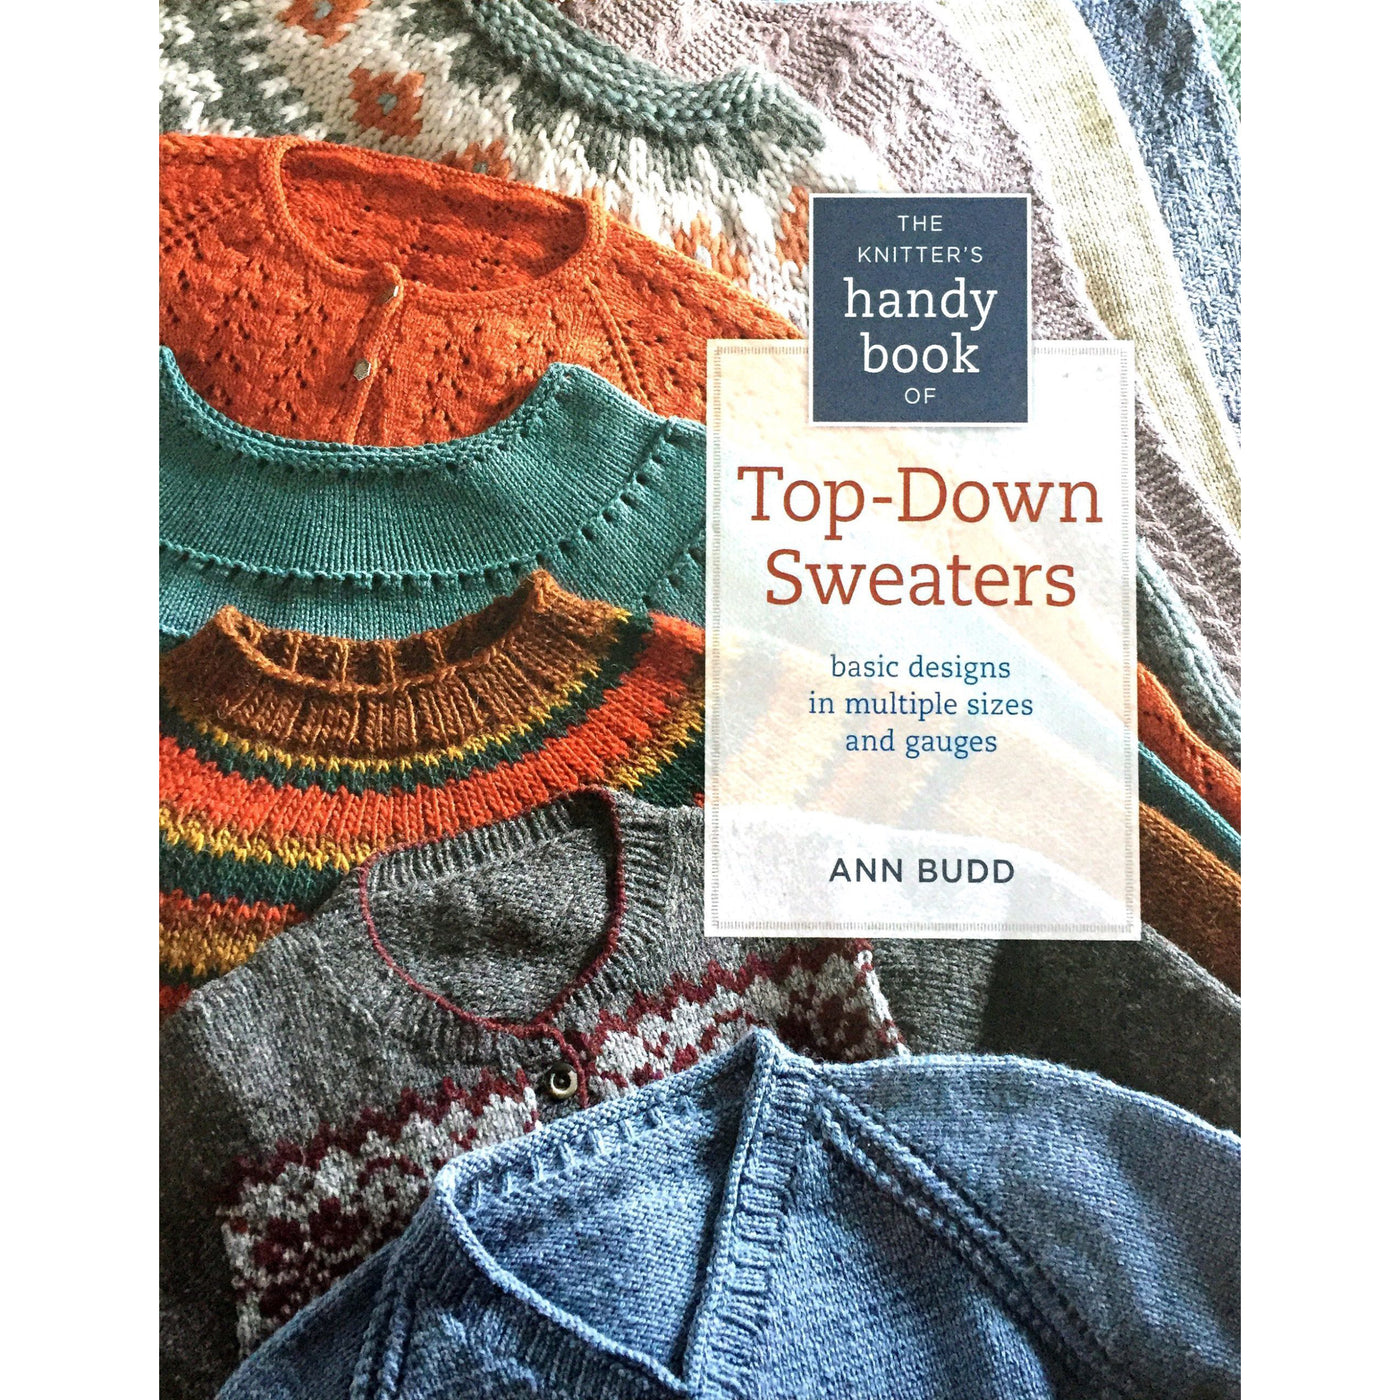 Knitter's Handy Book of Top-Down Sweaters (Ann Budd)